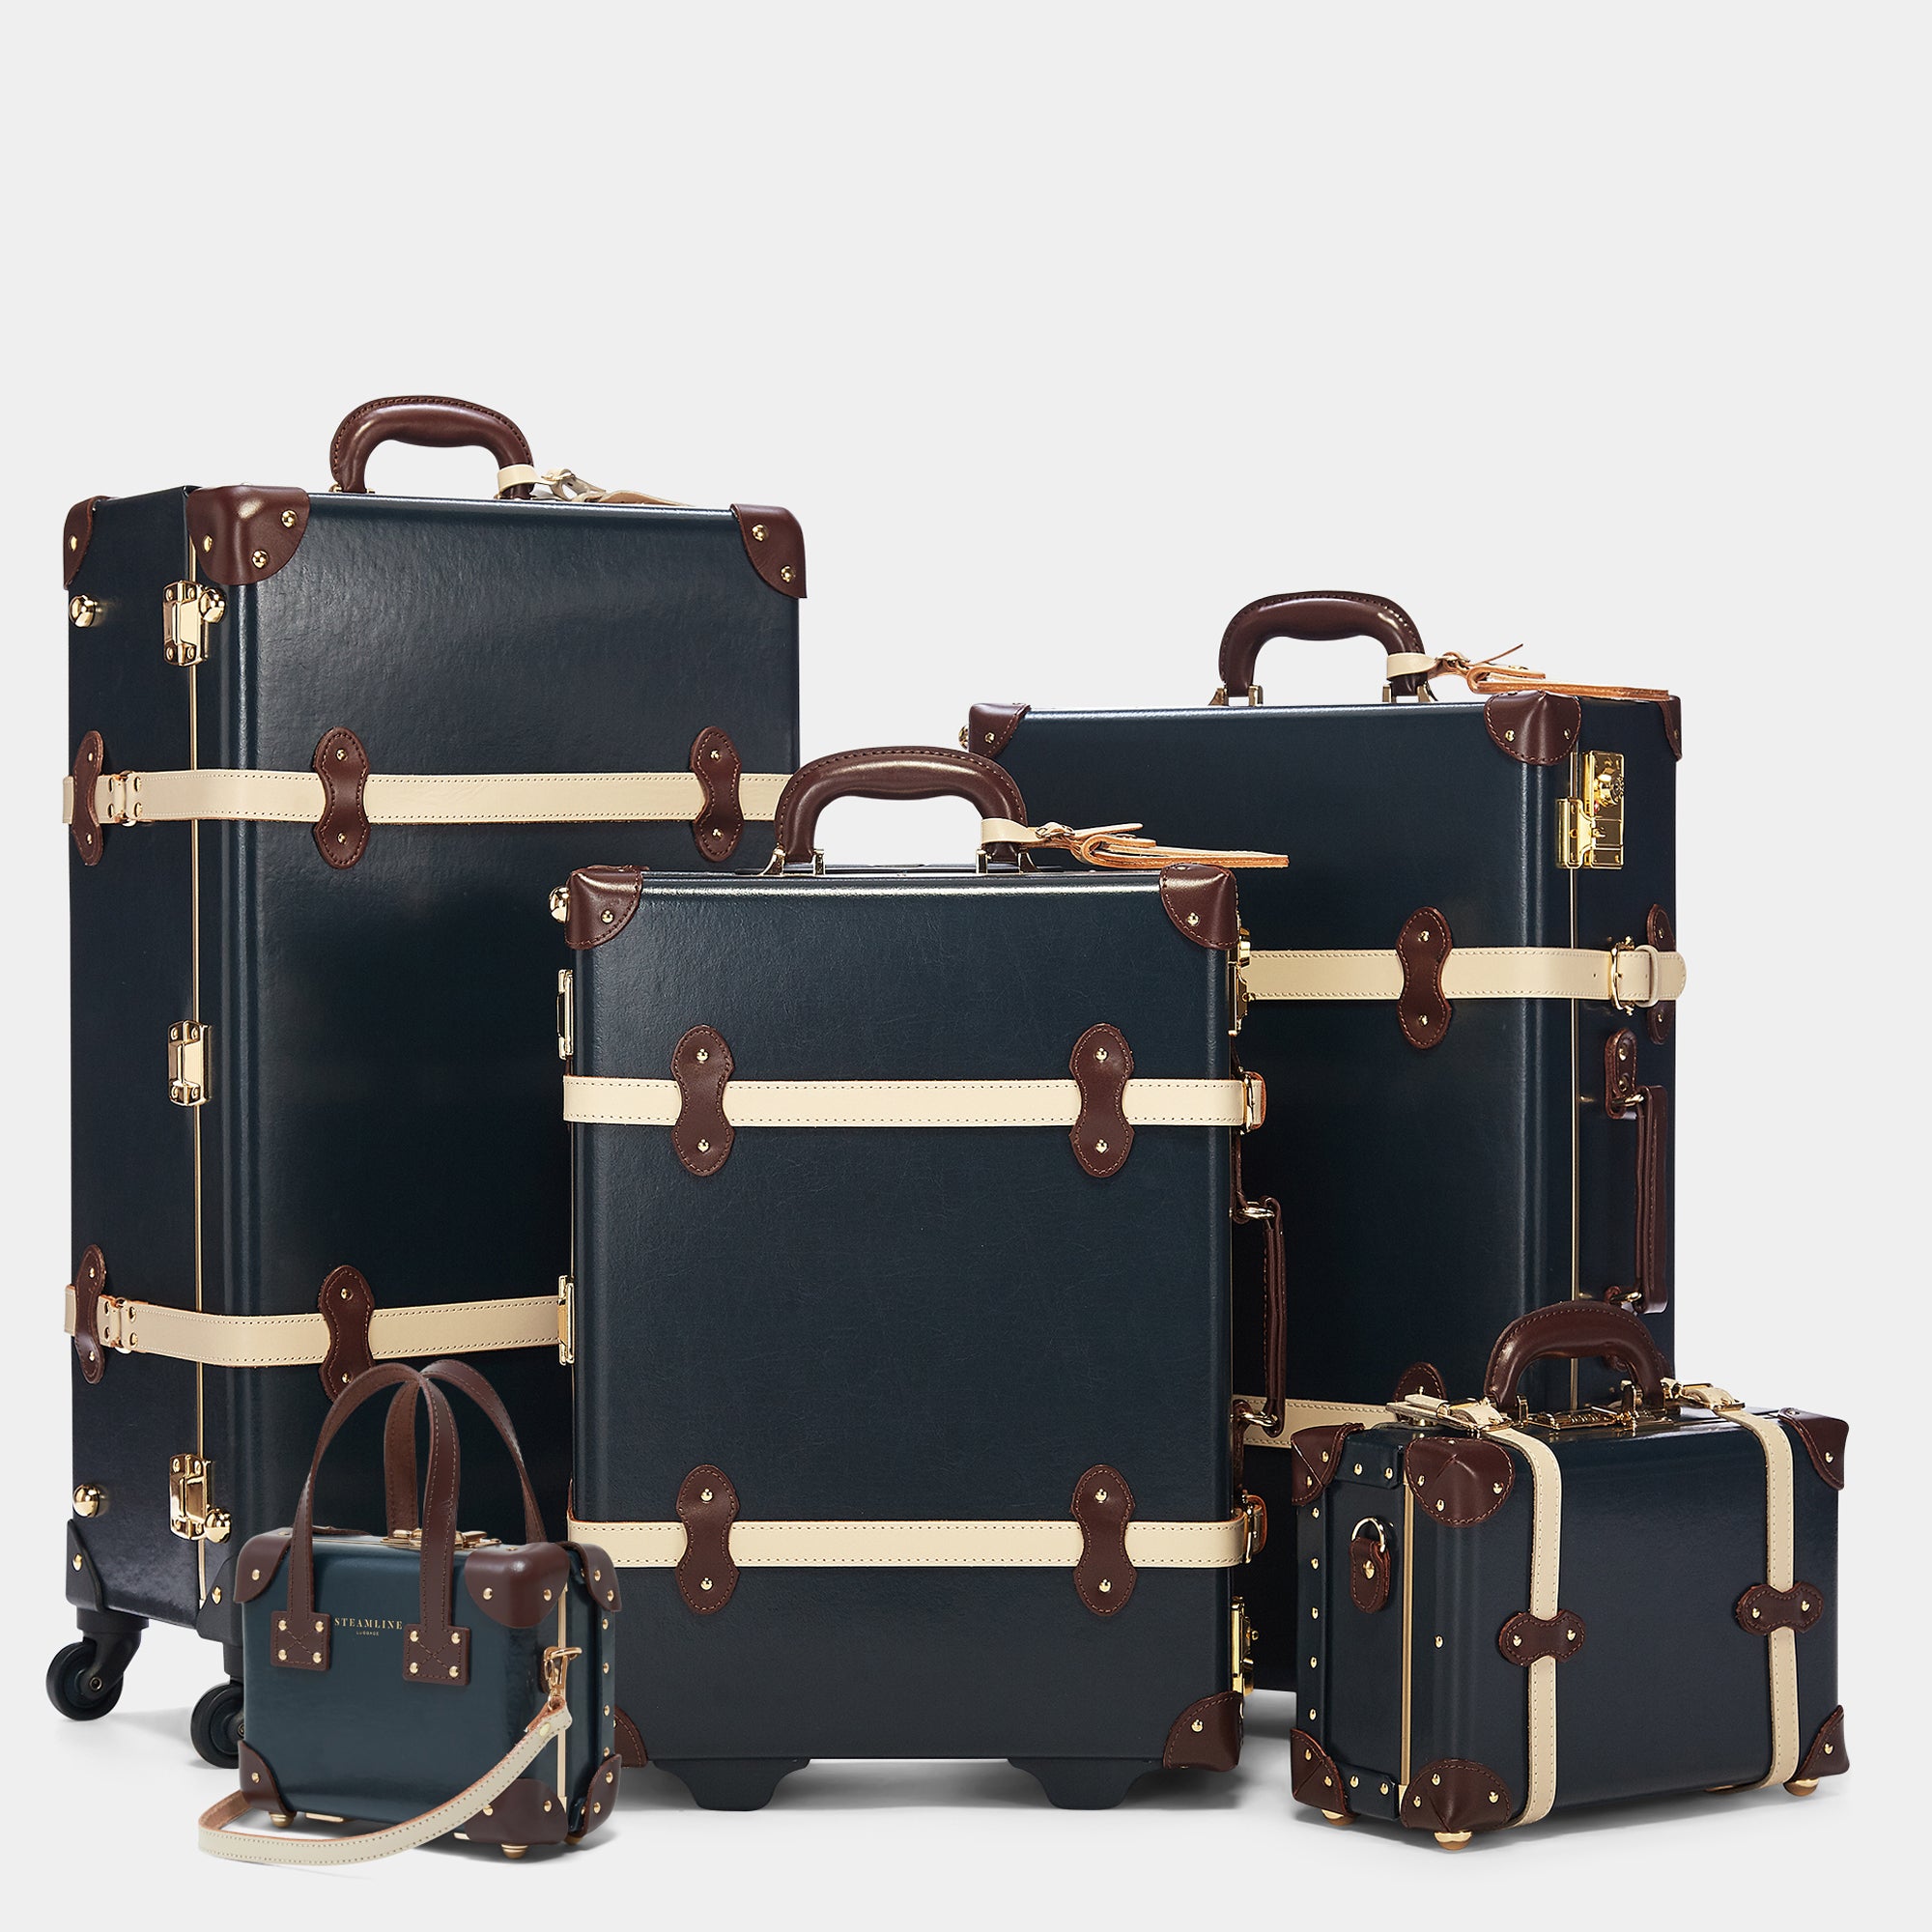 SteamLine Luggage  Luxury luggage, Luggage brands, Luggage